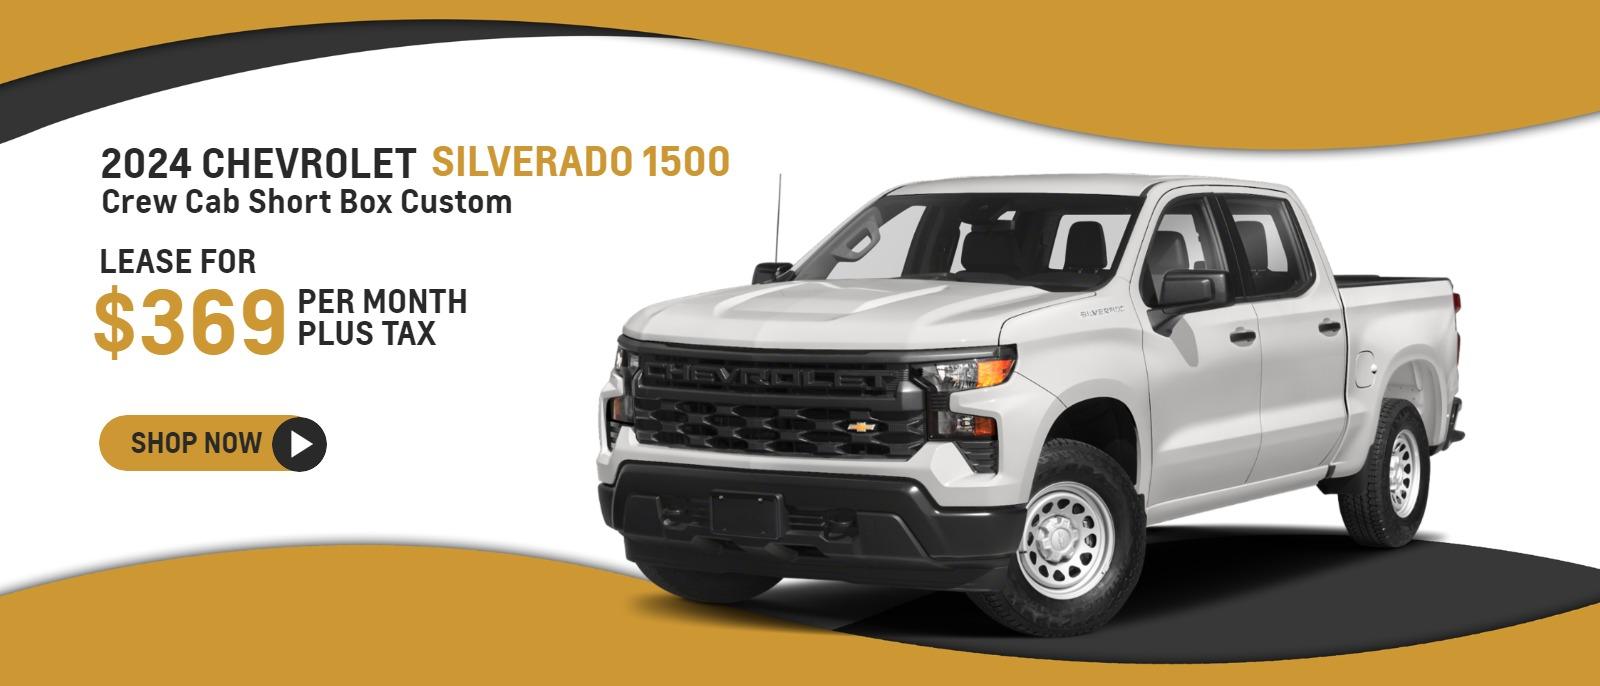 2024 Chevrolet Silverado 1500 Crew Cab Short Box Custom
Lease for $369 per month plus tax